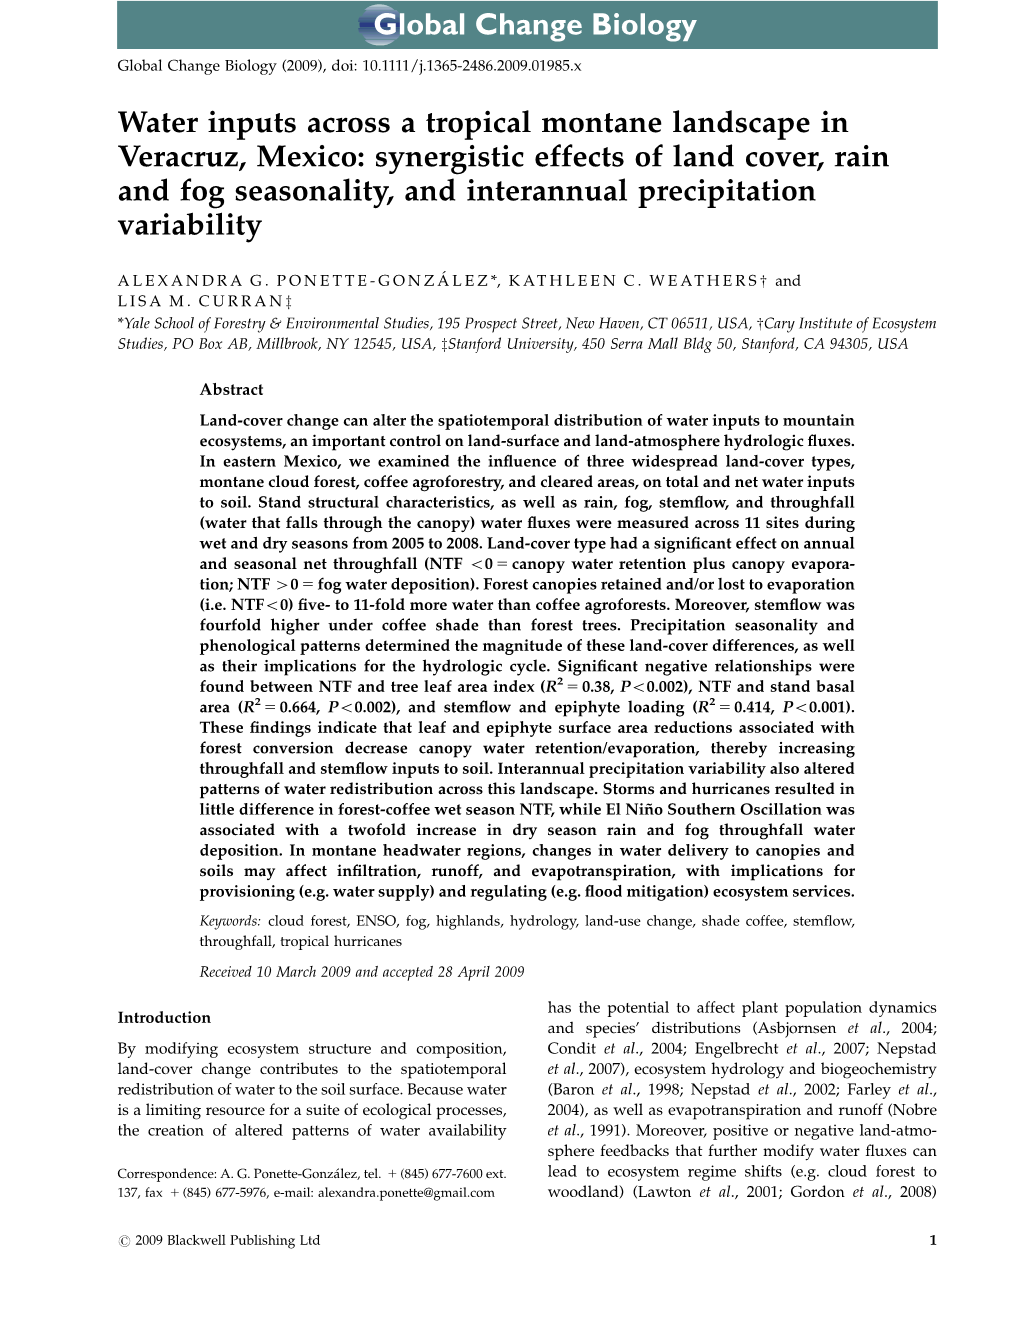 Synergistic Effects of Land Cover, Rain and Fog Seasonality, and Interannual Precipitation Variability